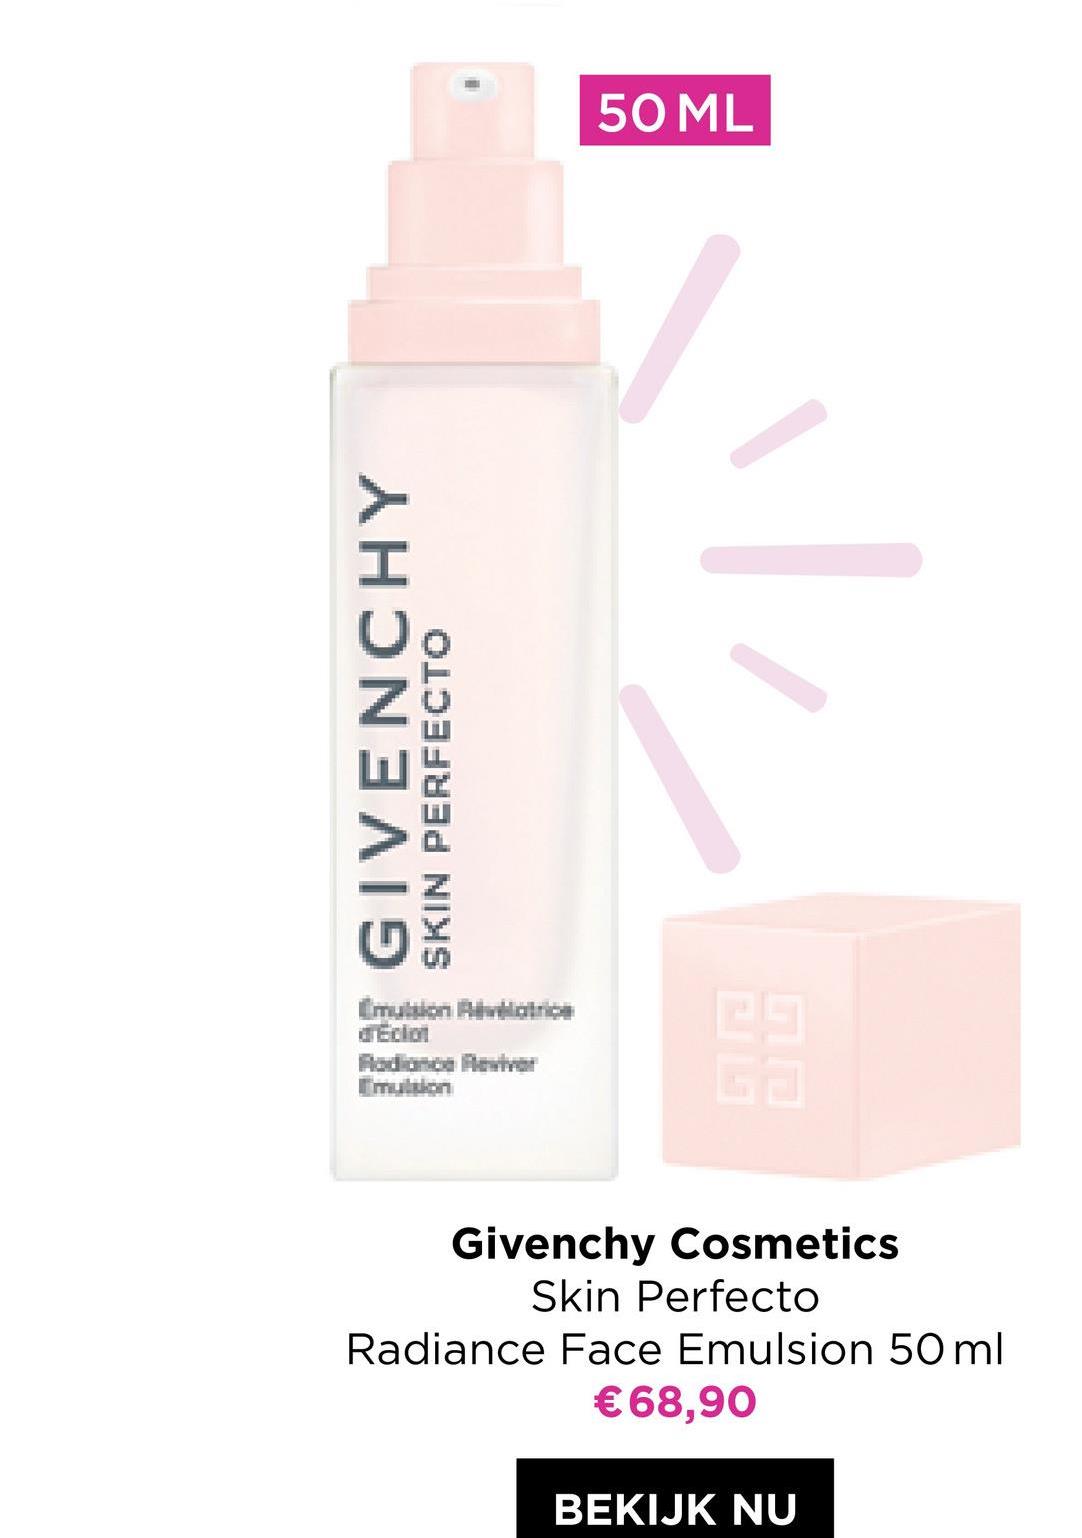 GIVENCHY
SKIN PERFECTO
Emulsion Rivelatrice
drEclot
50 ML
Givenchy Cosmetics
Skin Perfecto
Radiance Face Emulsion 50 ml
€ 68,90
BEKIJK NU